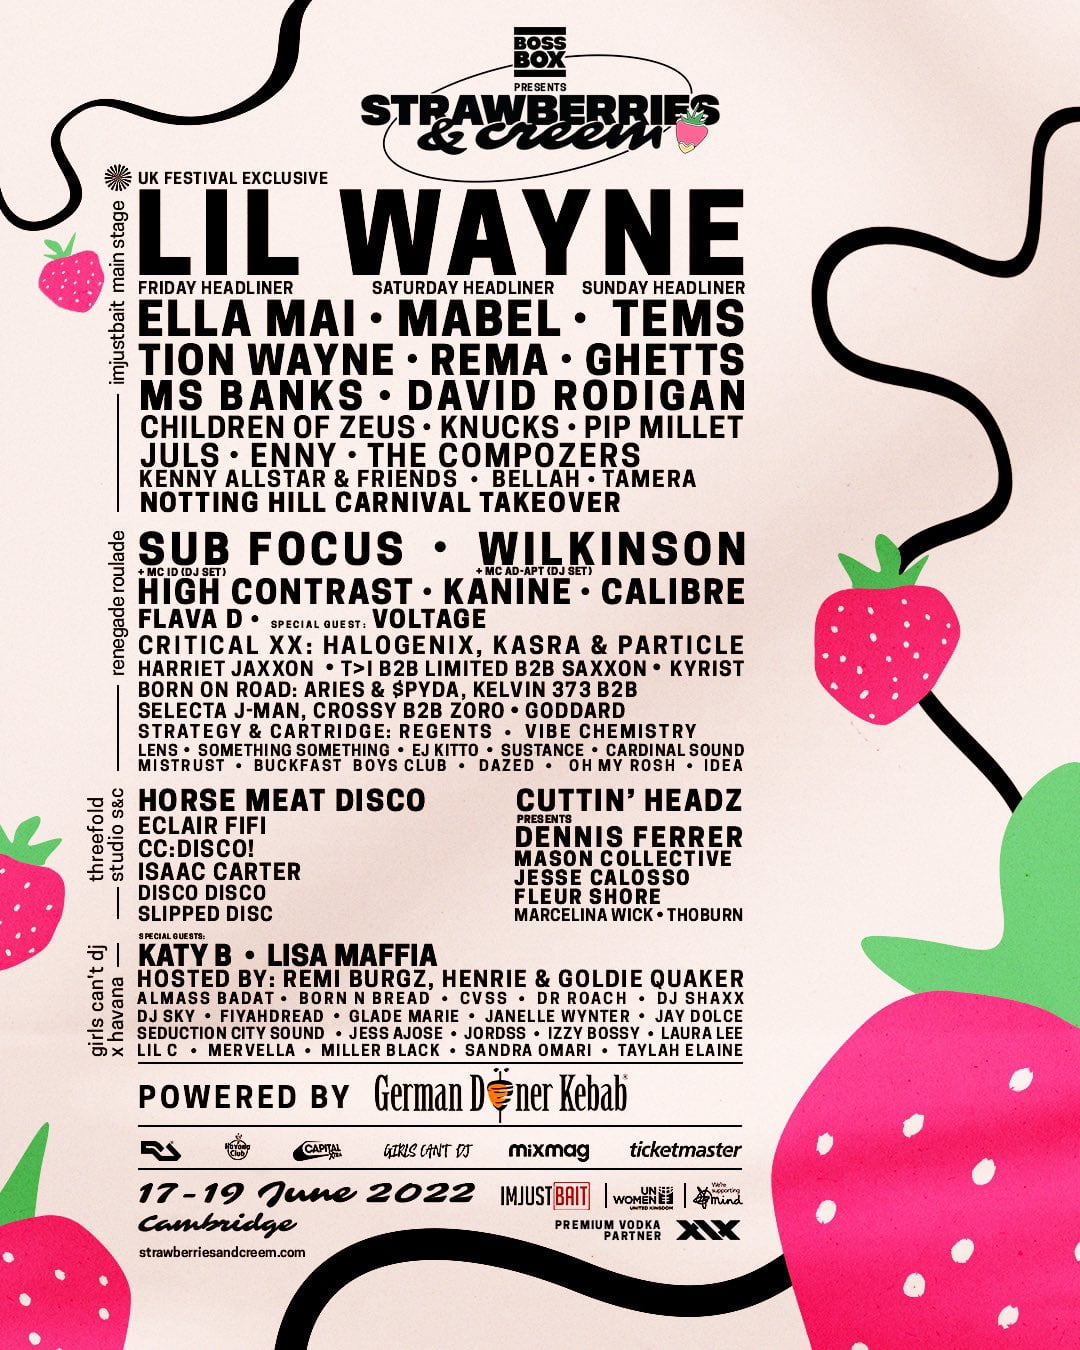 Lil Wayne, Tems & Ella Mai to headline Strawberries & Creem